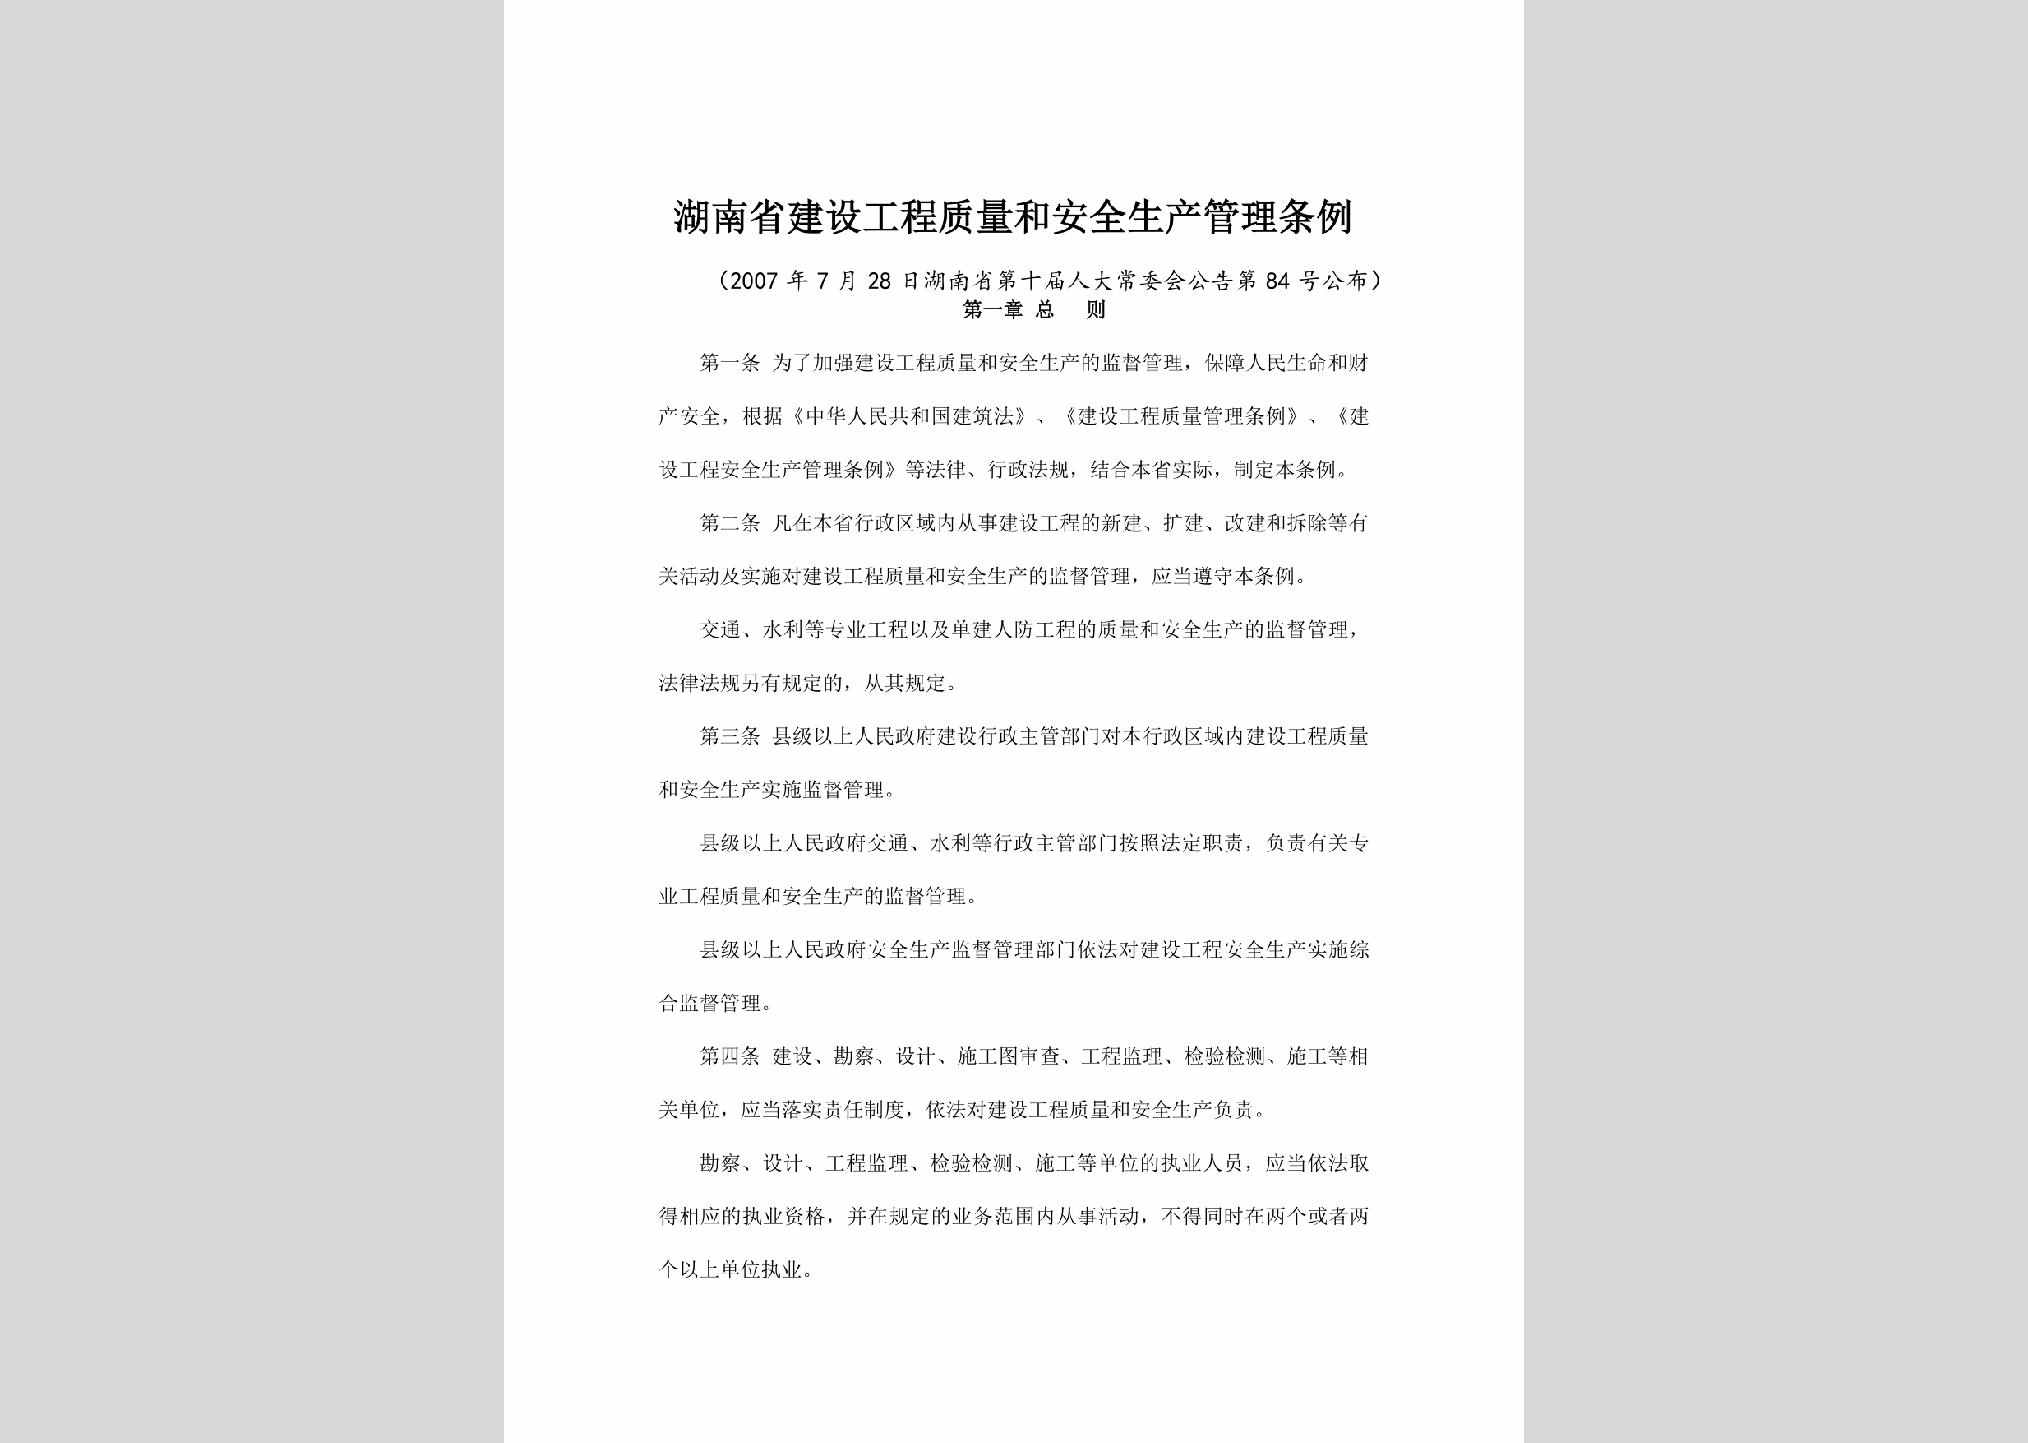 HUN-GCSCGLTL-2007：湖南省建设工程质量和安全生产管理条例